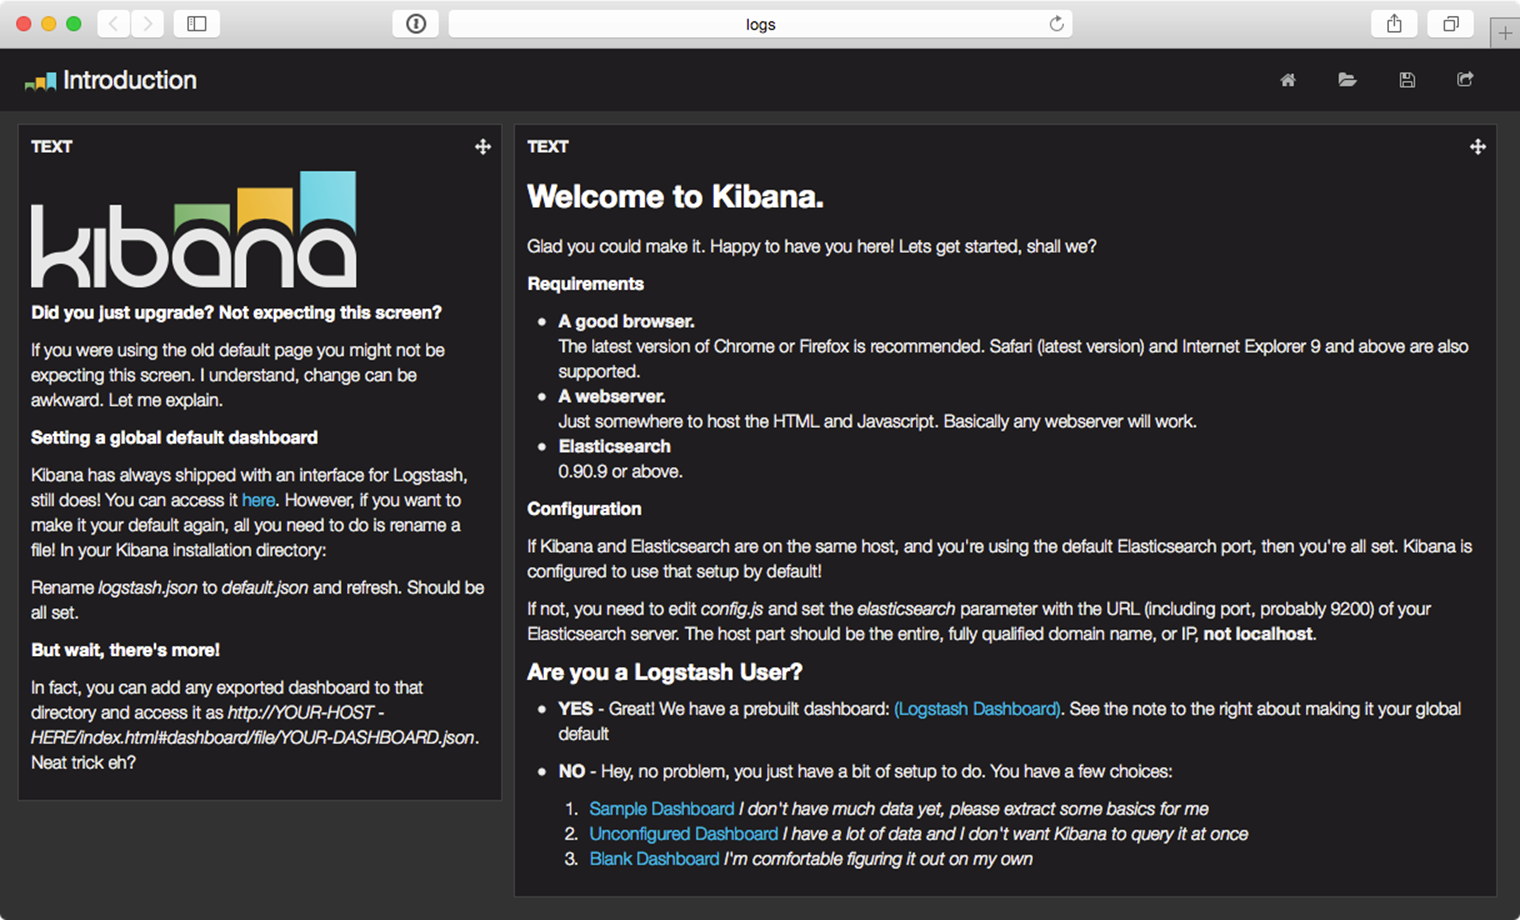 Kibana's default homepage